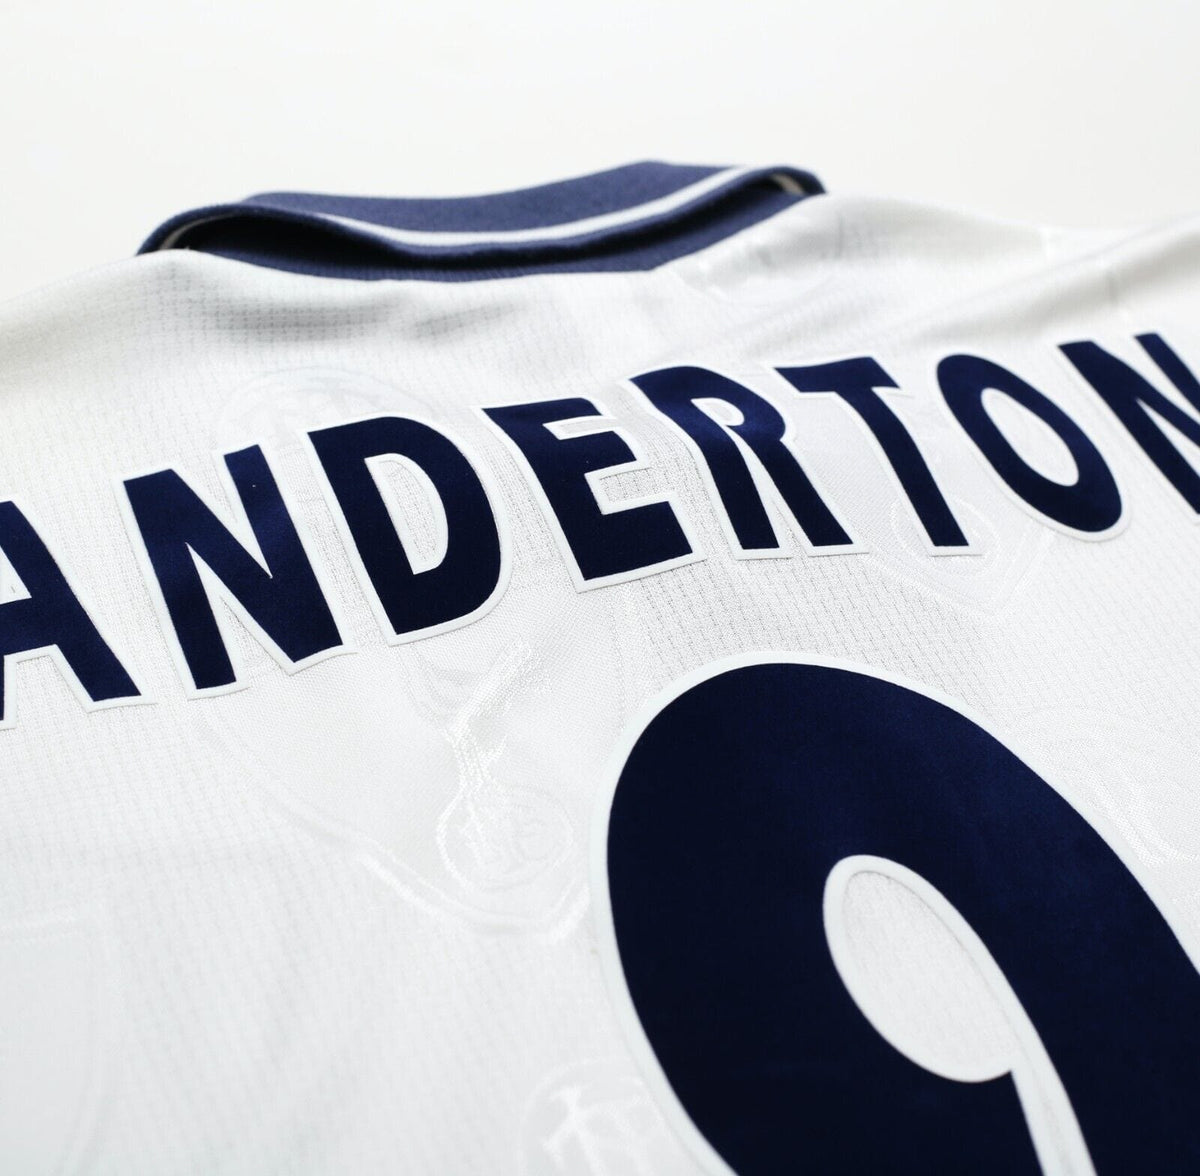 Authentic 1991-94 Tottenham Hotspur shirt Anderton 9